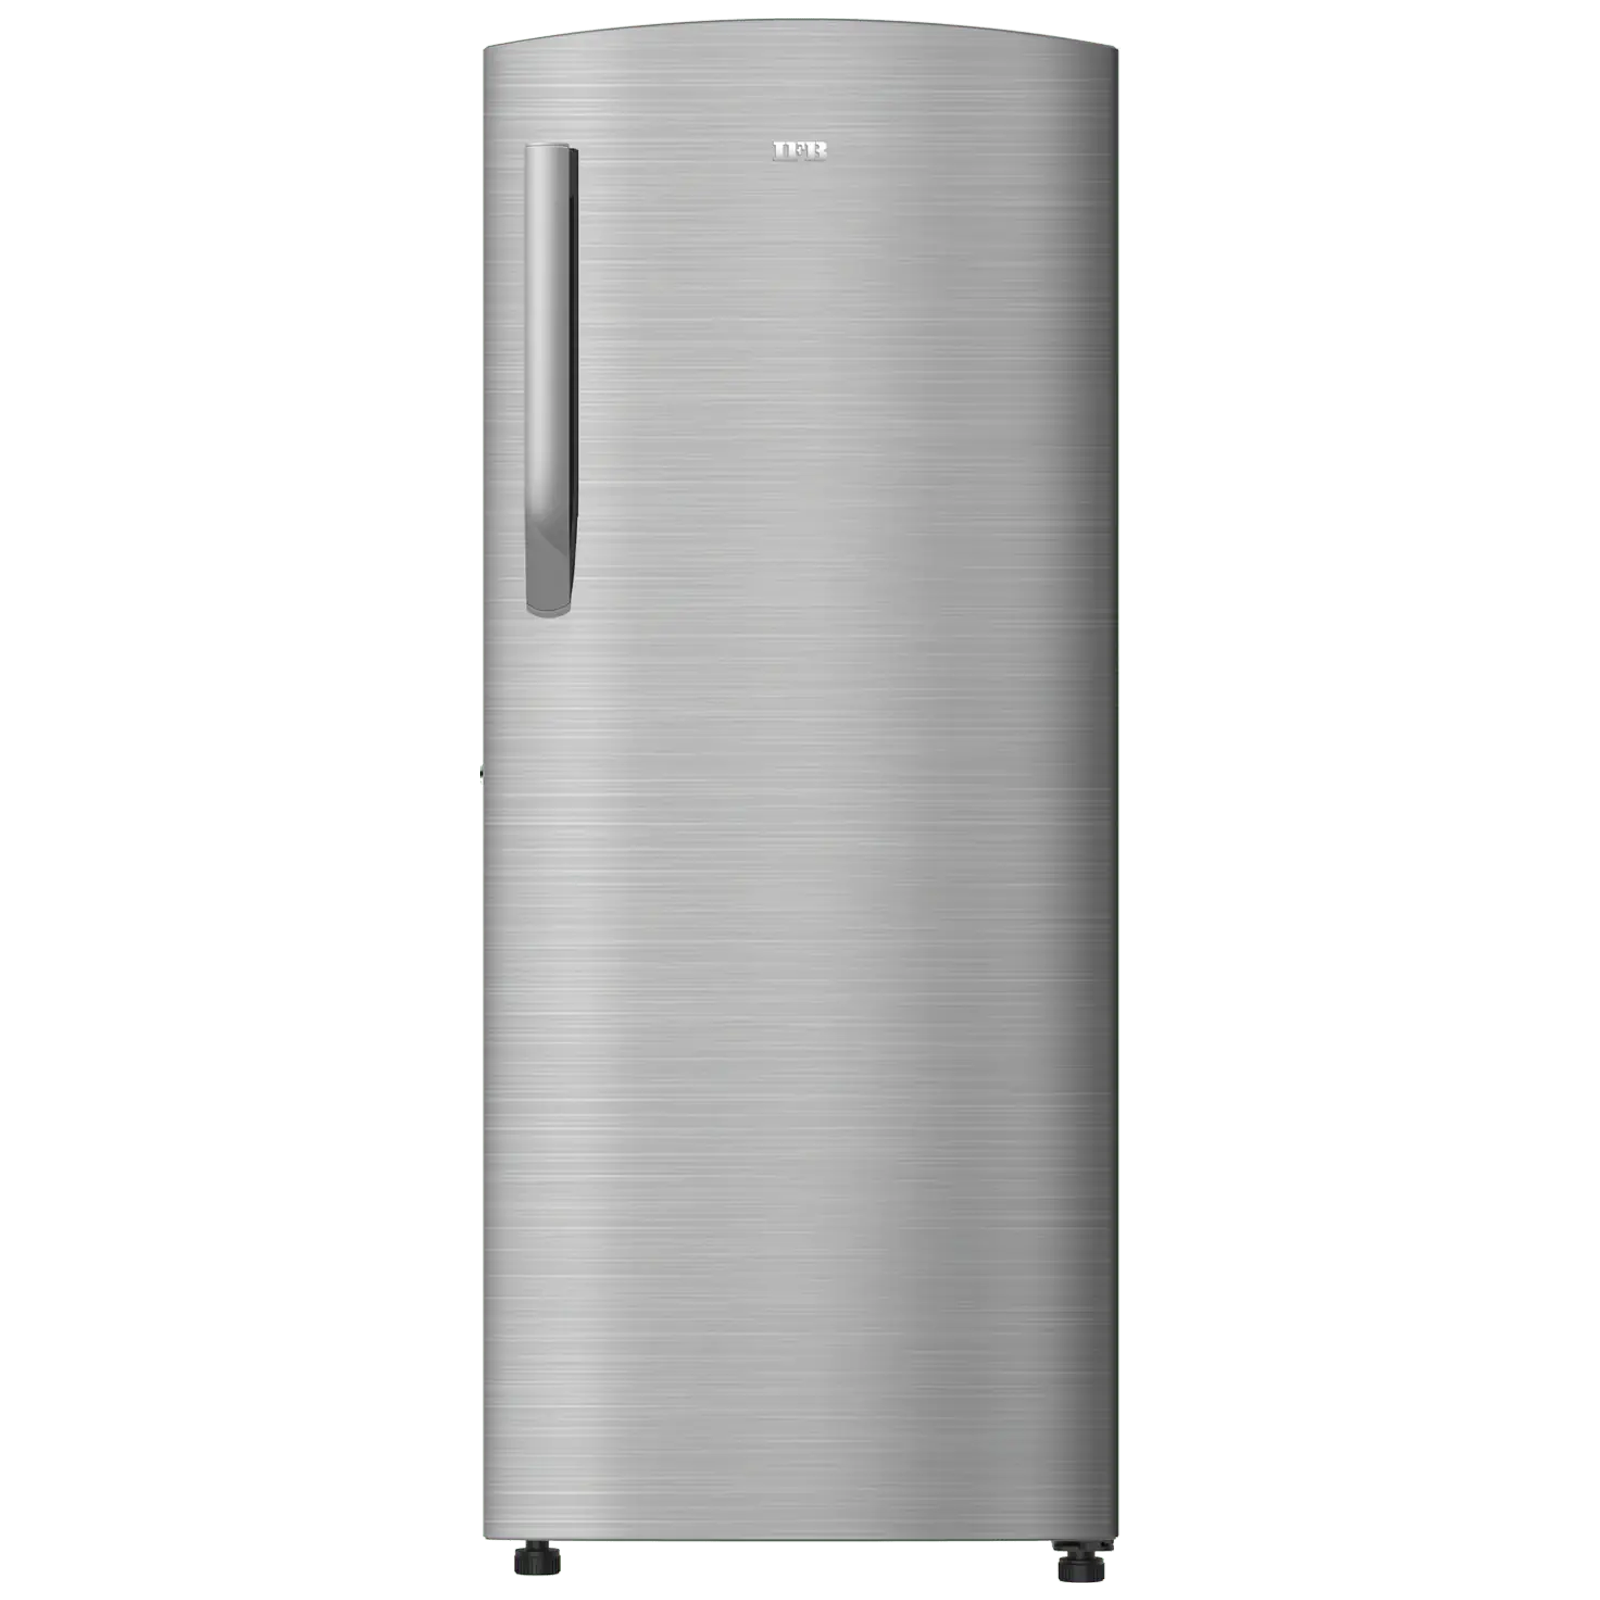 IFB Advance Cool 212 Litres 5 Star Direct Cool Single Door Refrigerator with Antibacterial Gasket (IFBDC2325IGS, Grey Steel)